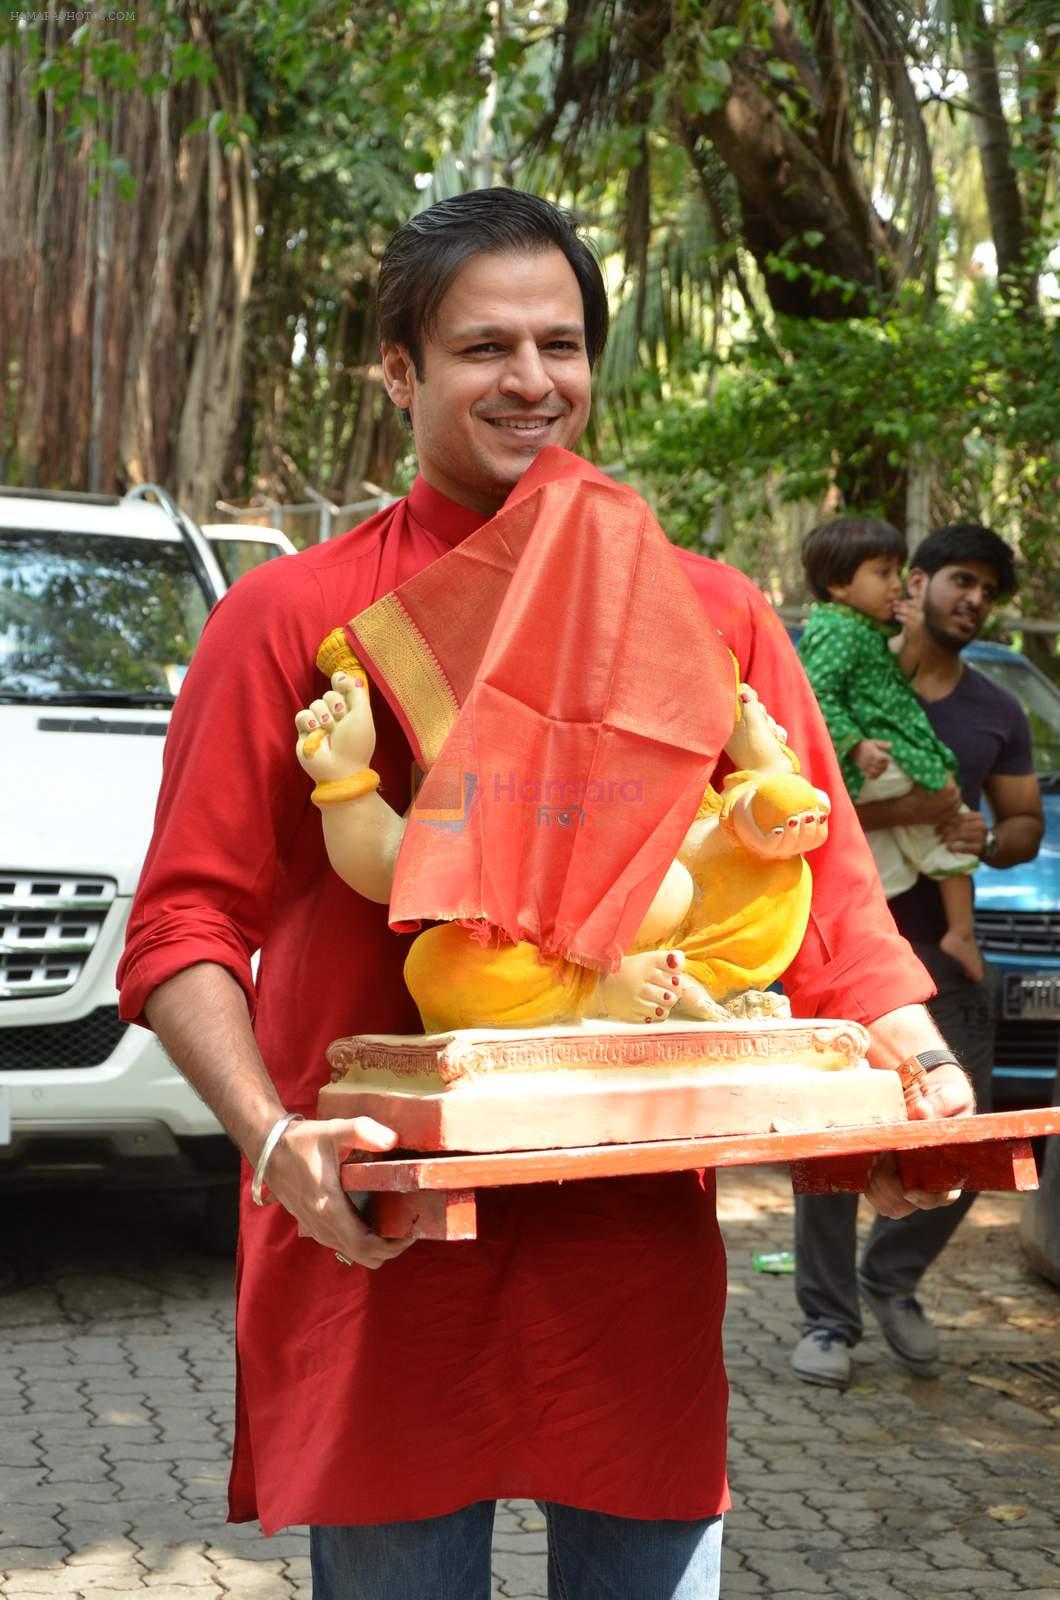 Vivek Oberoi's Ganpati celebrations on 17th Sept 2015